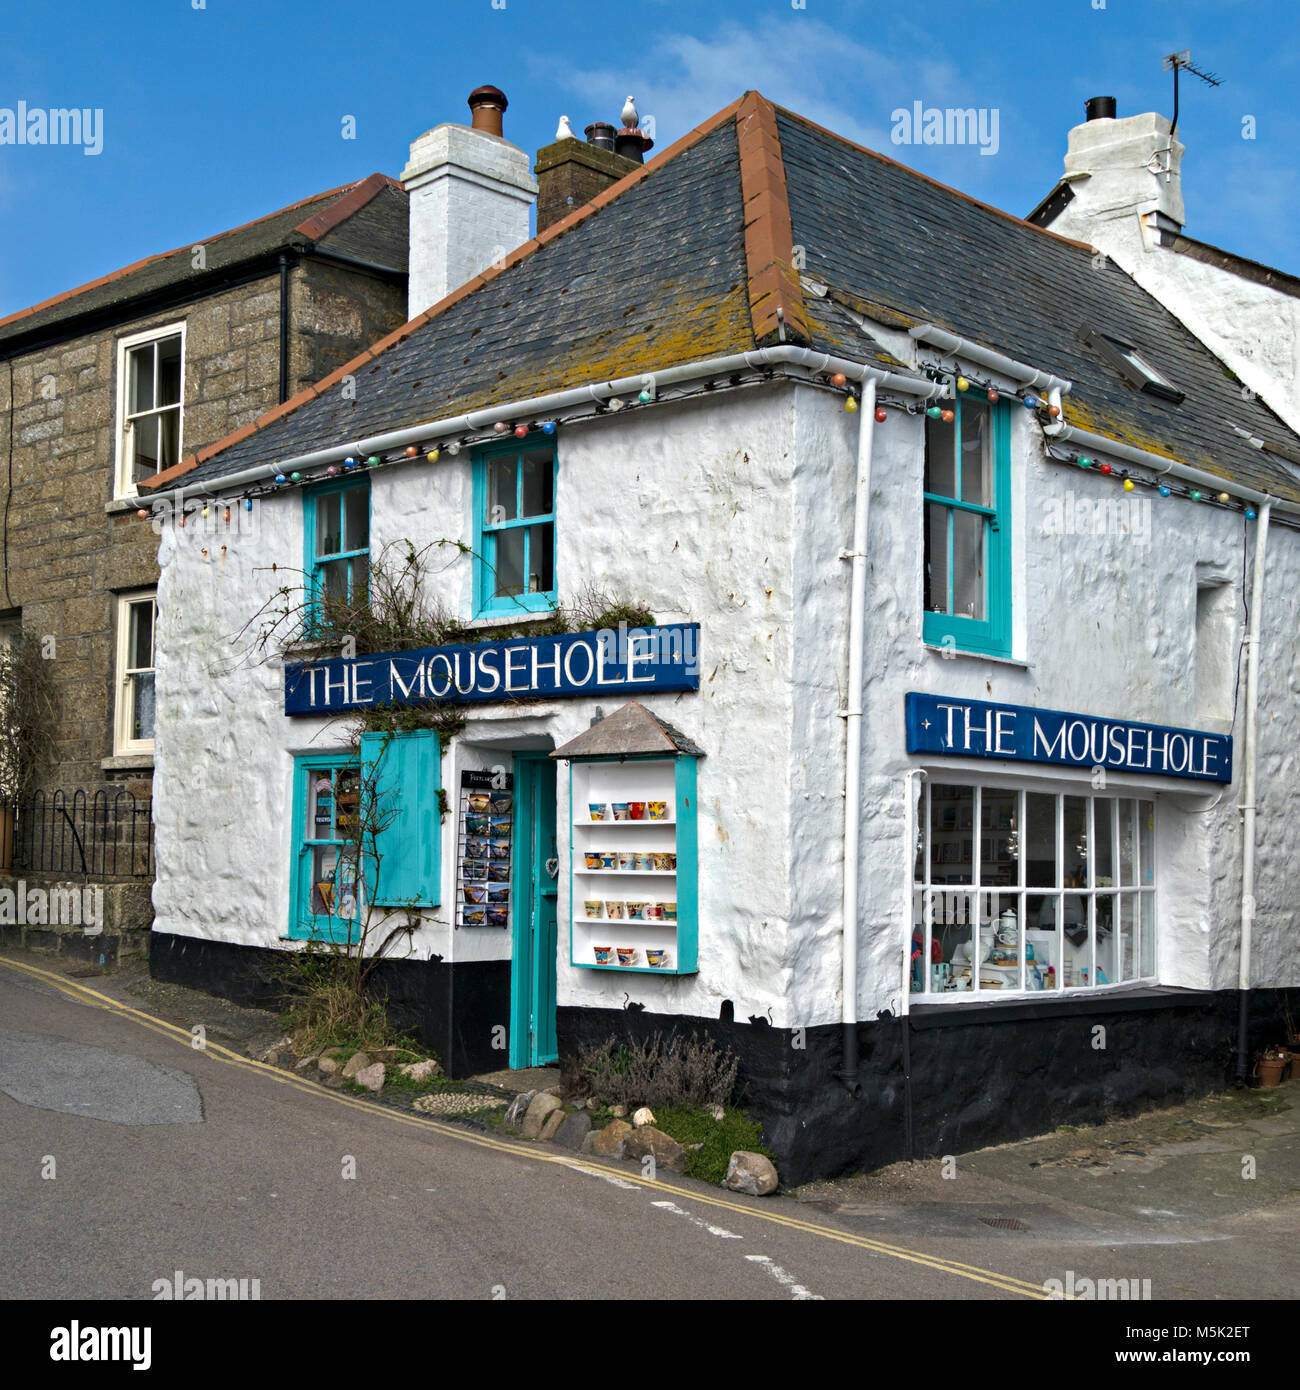 Ancienne station blanchis corner cadeaux Mousehole, Cornwall, England, UK Banque D'Images